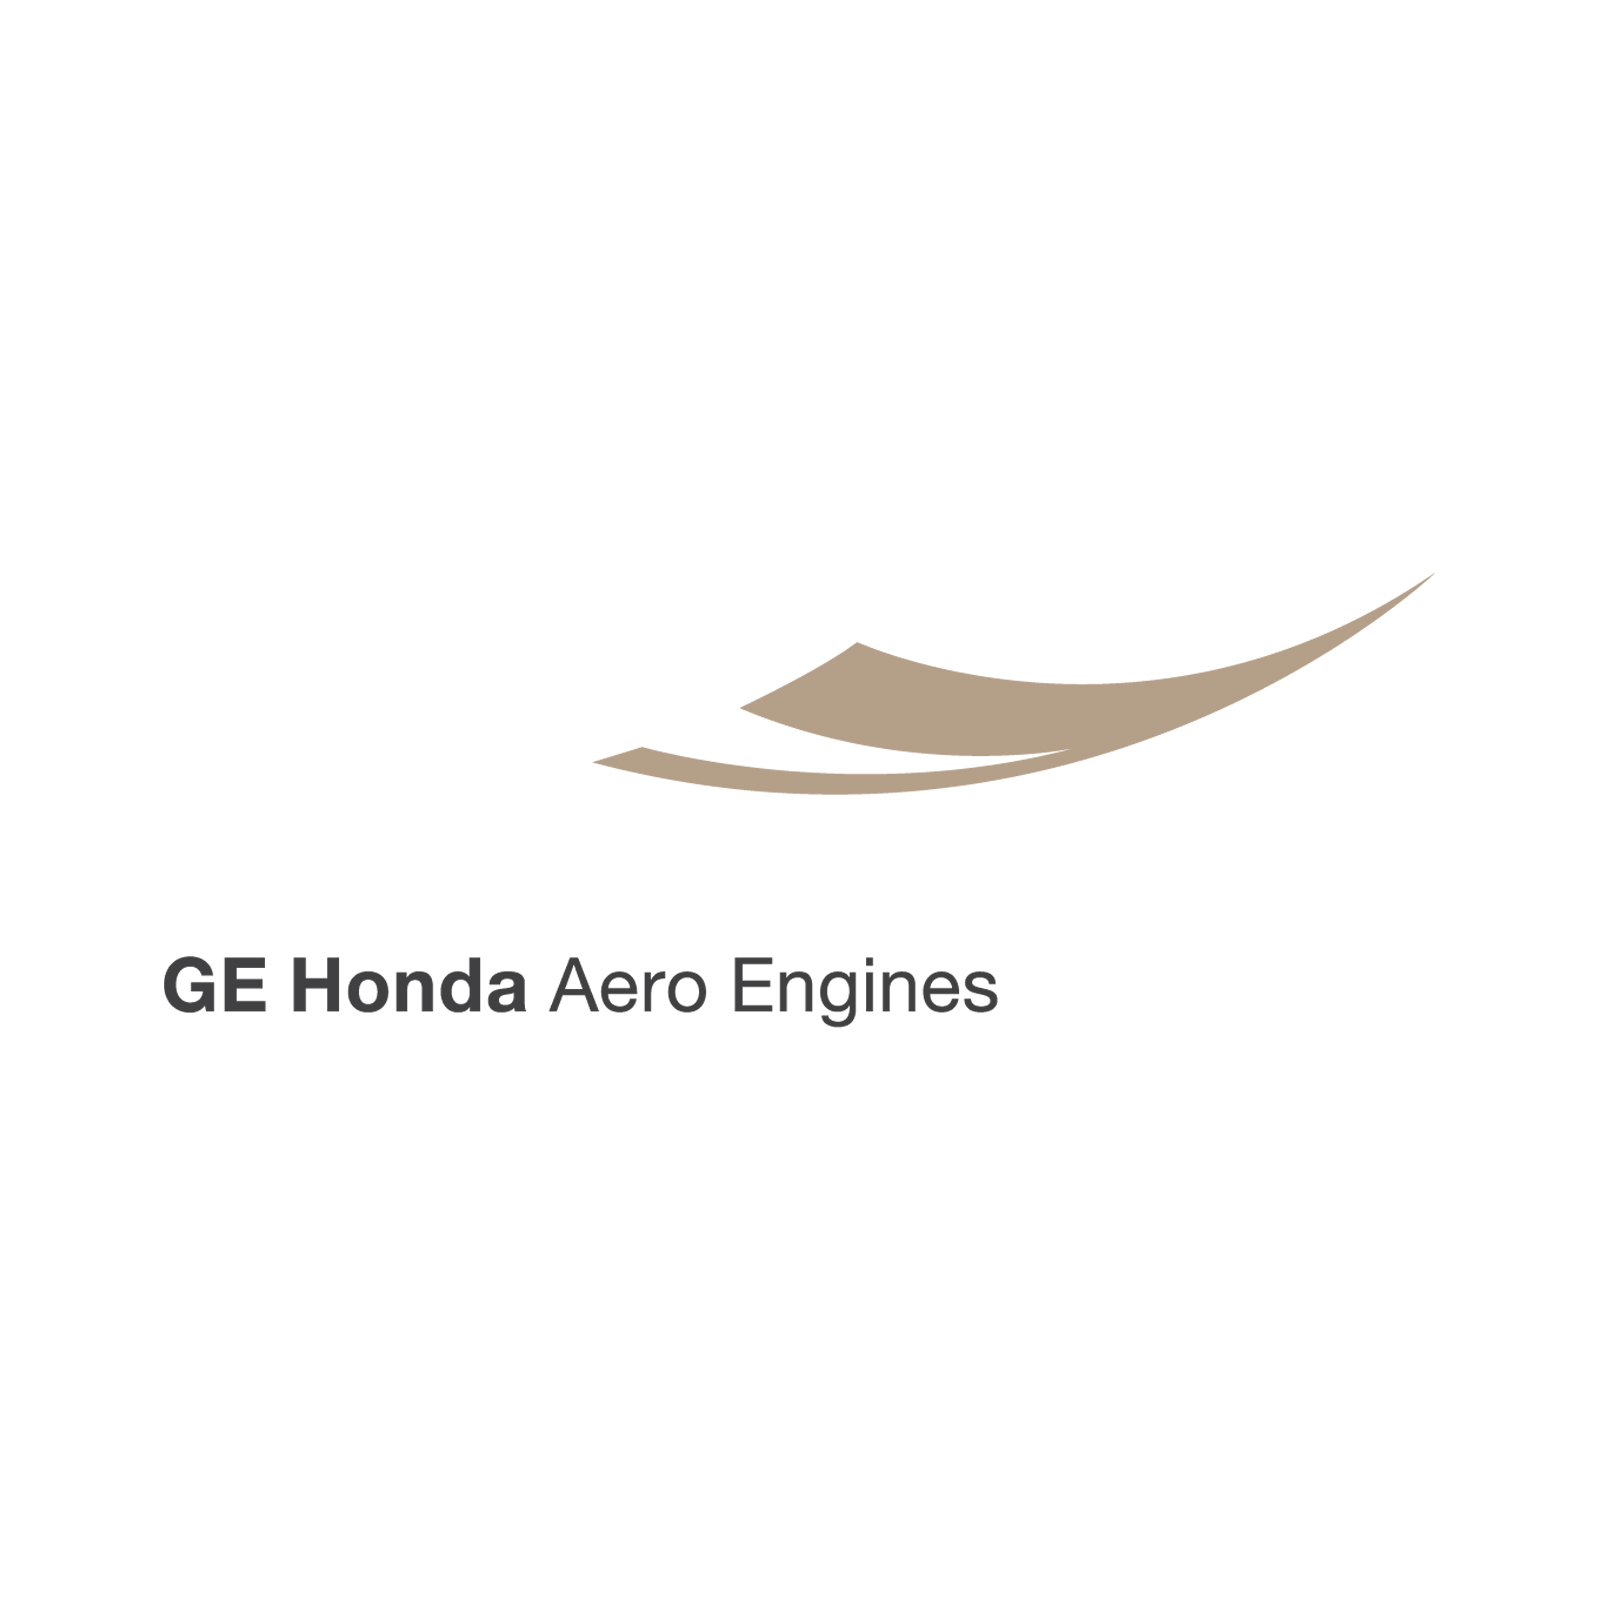 Logo GE Honda Aero Engines